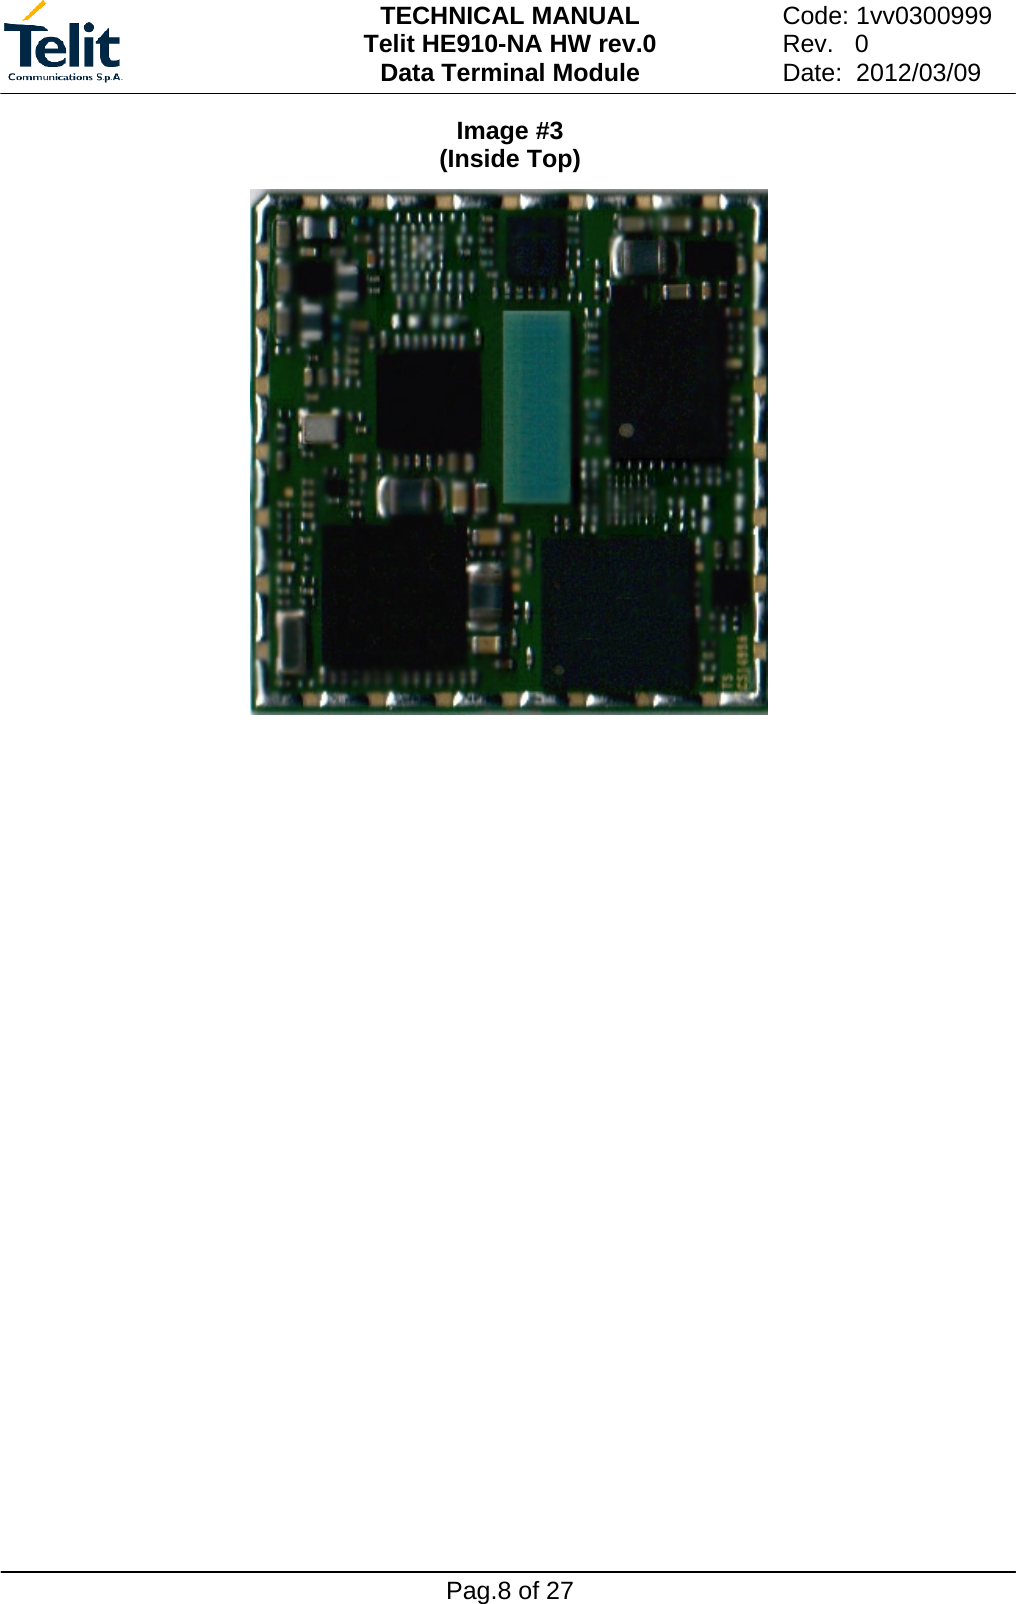 TECHNICAL MANUAL Telit HE910-NA HW rev.0 Data Terminal Module   Pag.8 of 27 Code: 1vv0300999    Rev.   0  Date:  2012/03/09  Image #3  (Inside Top)        